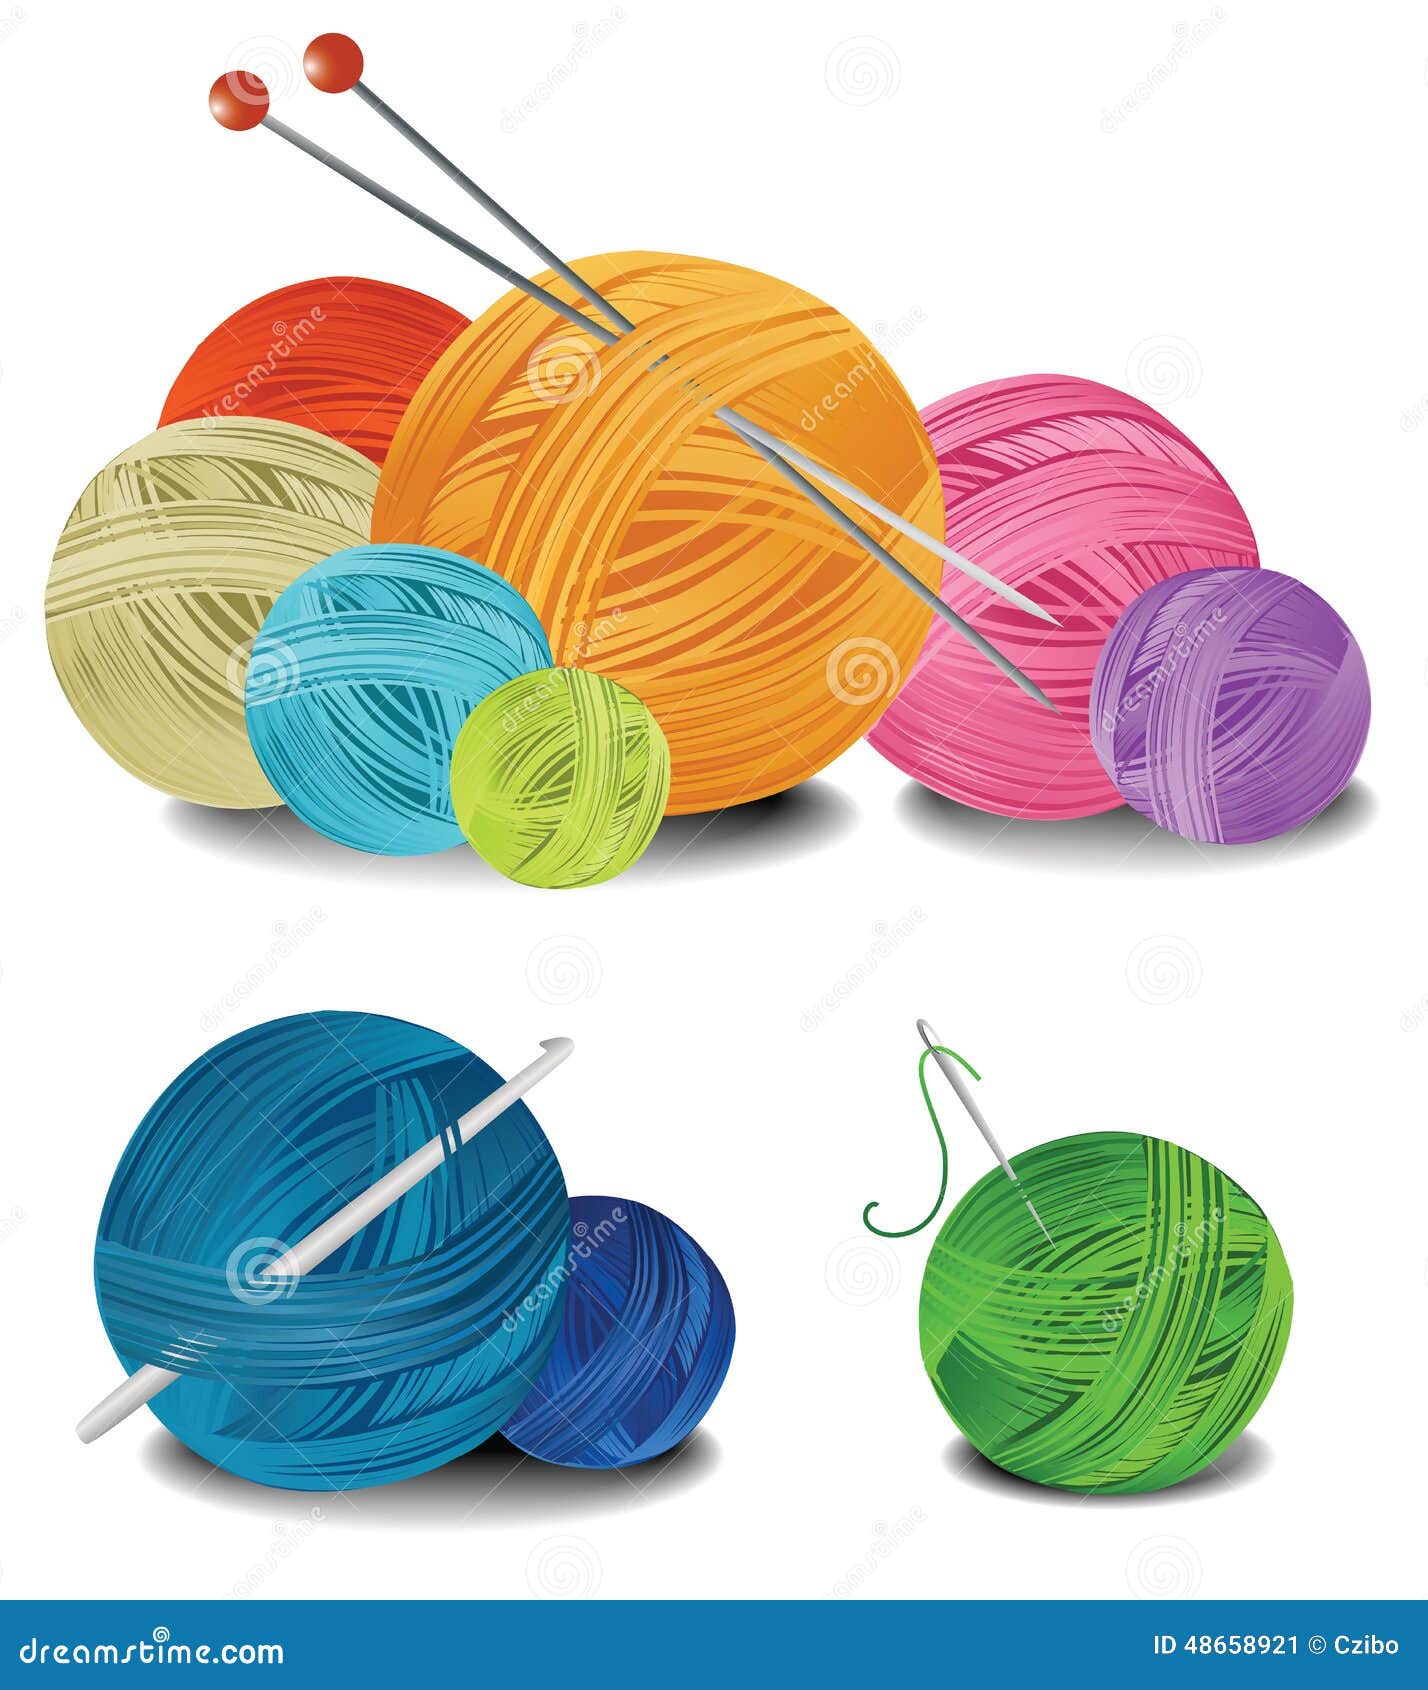 Balls of wool stock vector. Illustration of needles, knit - 48658921